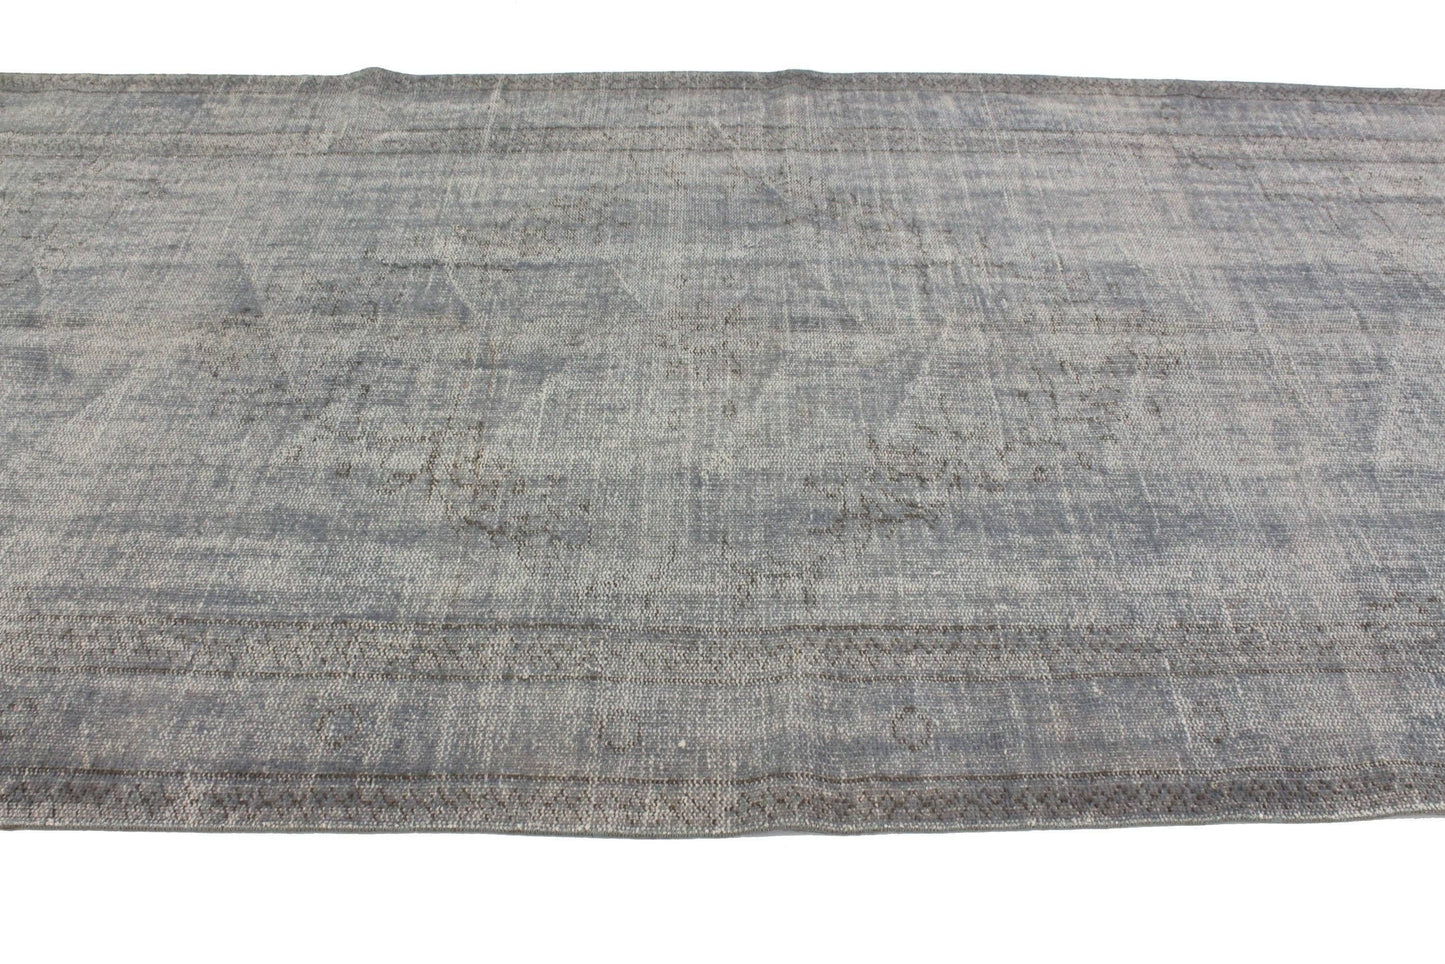 5x8 Turkish Vintage Area Gray Carpet Rug, Vintage Over dye Rug, Living Room Rug, Contemporary decor, Bedroom rug, Minimalist rug, 3323